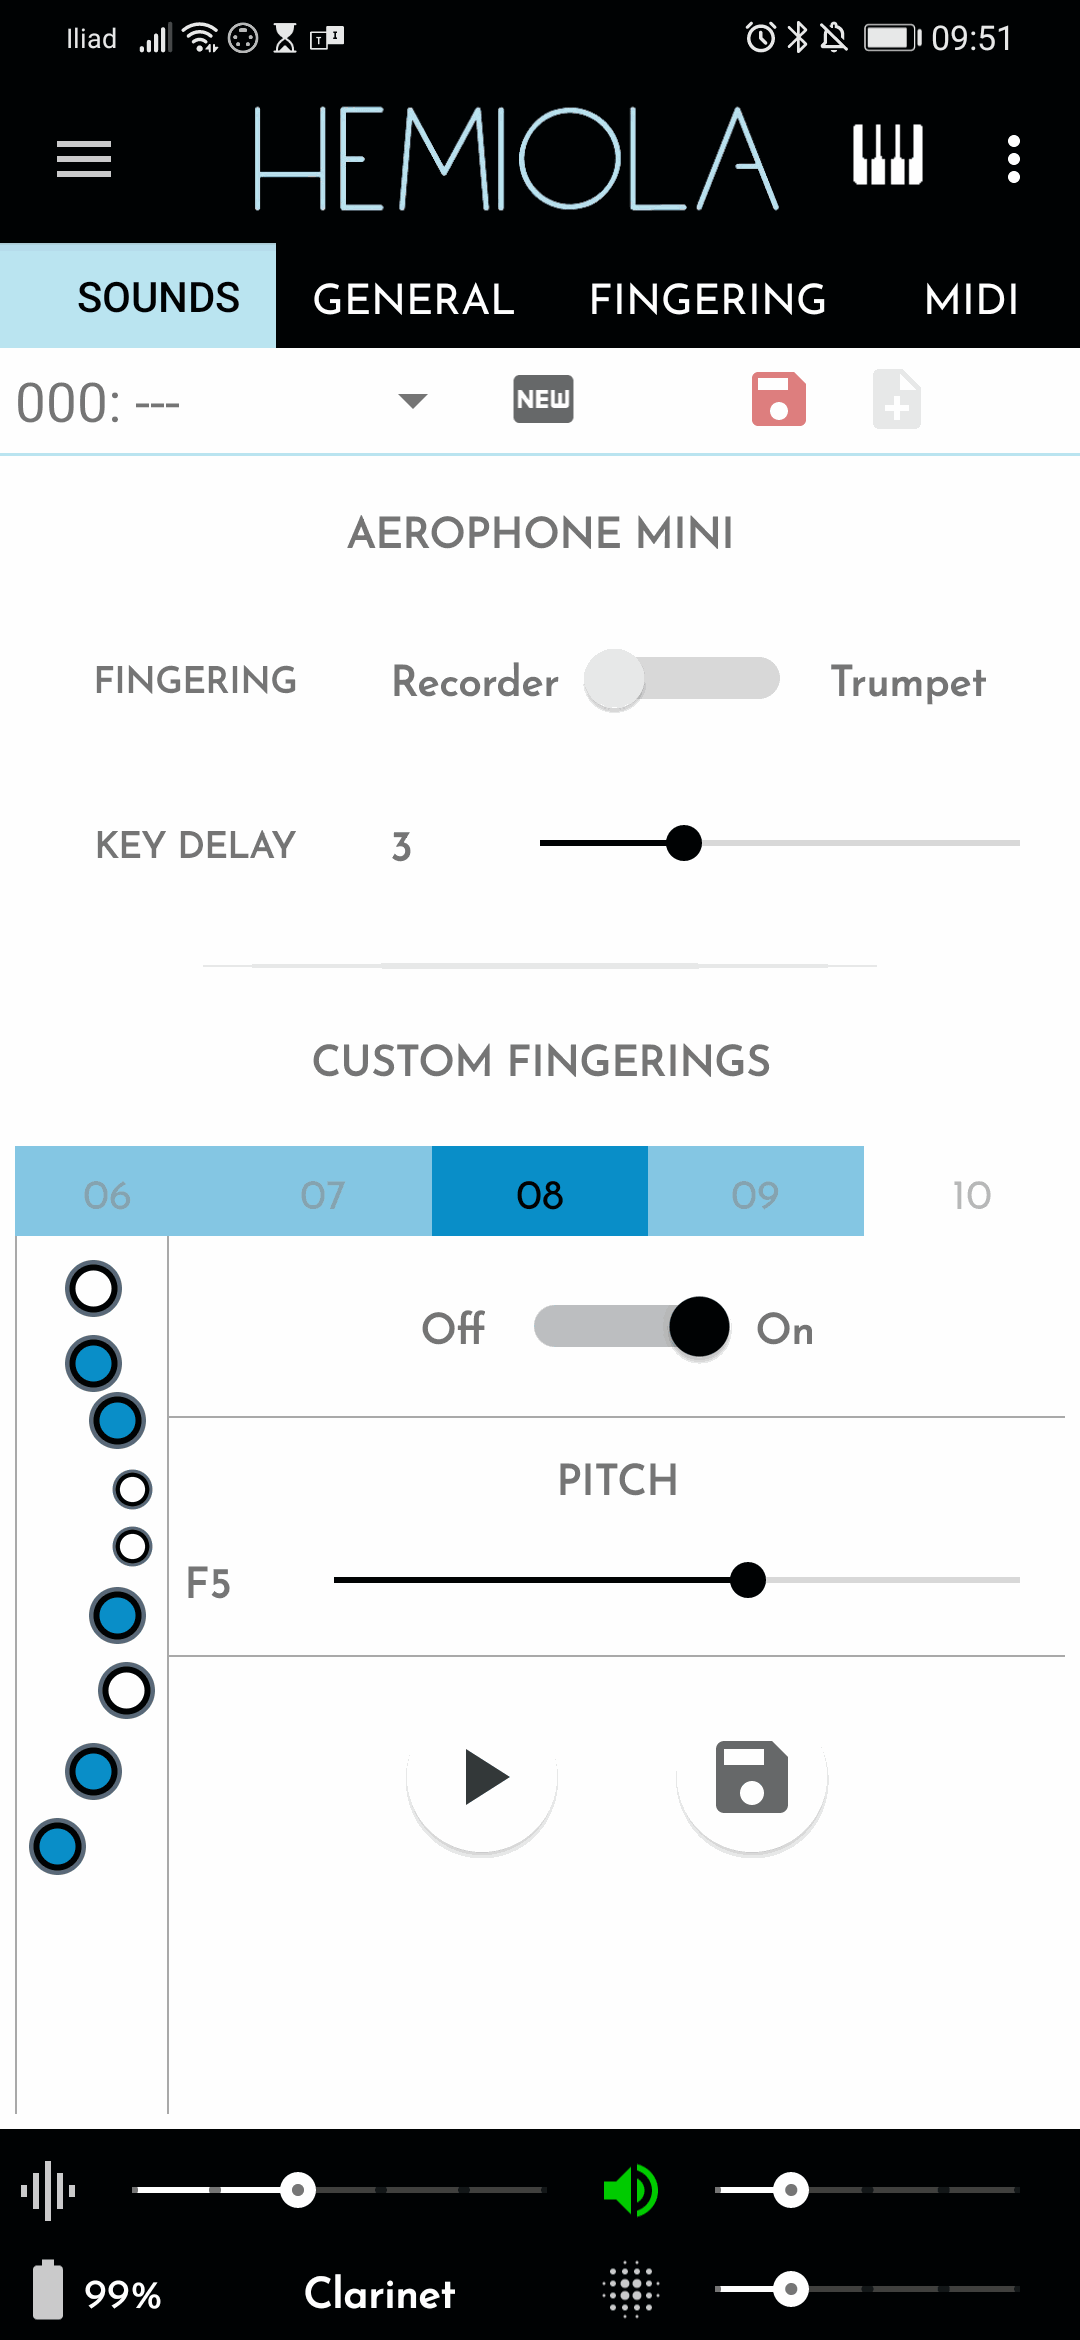 Roland Mini Plus app: Custom Fingering for F - Higher Octave